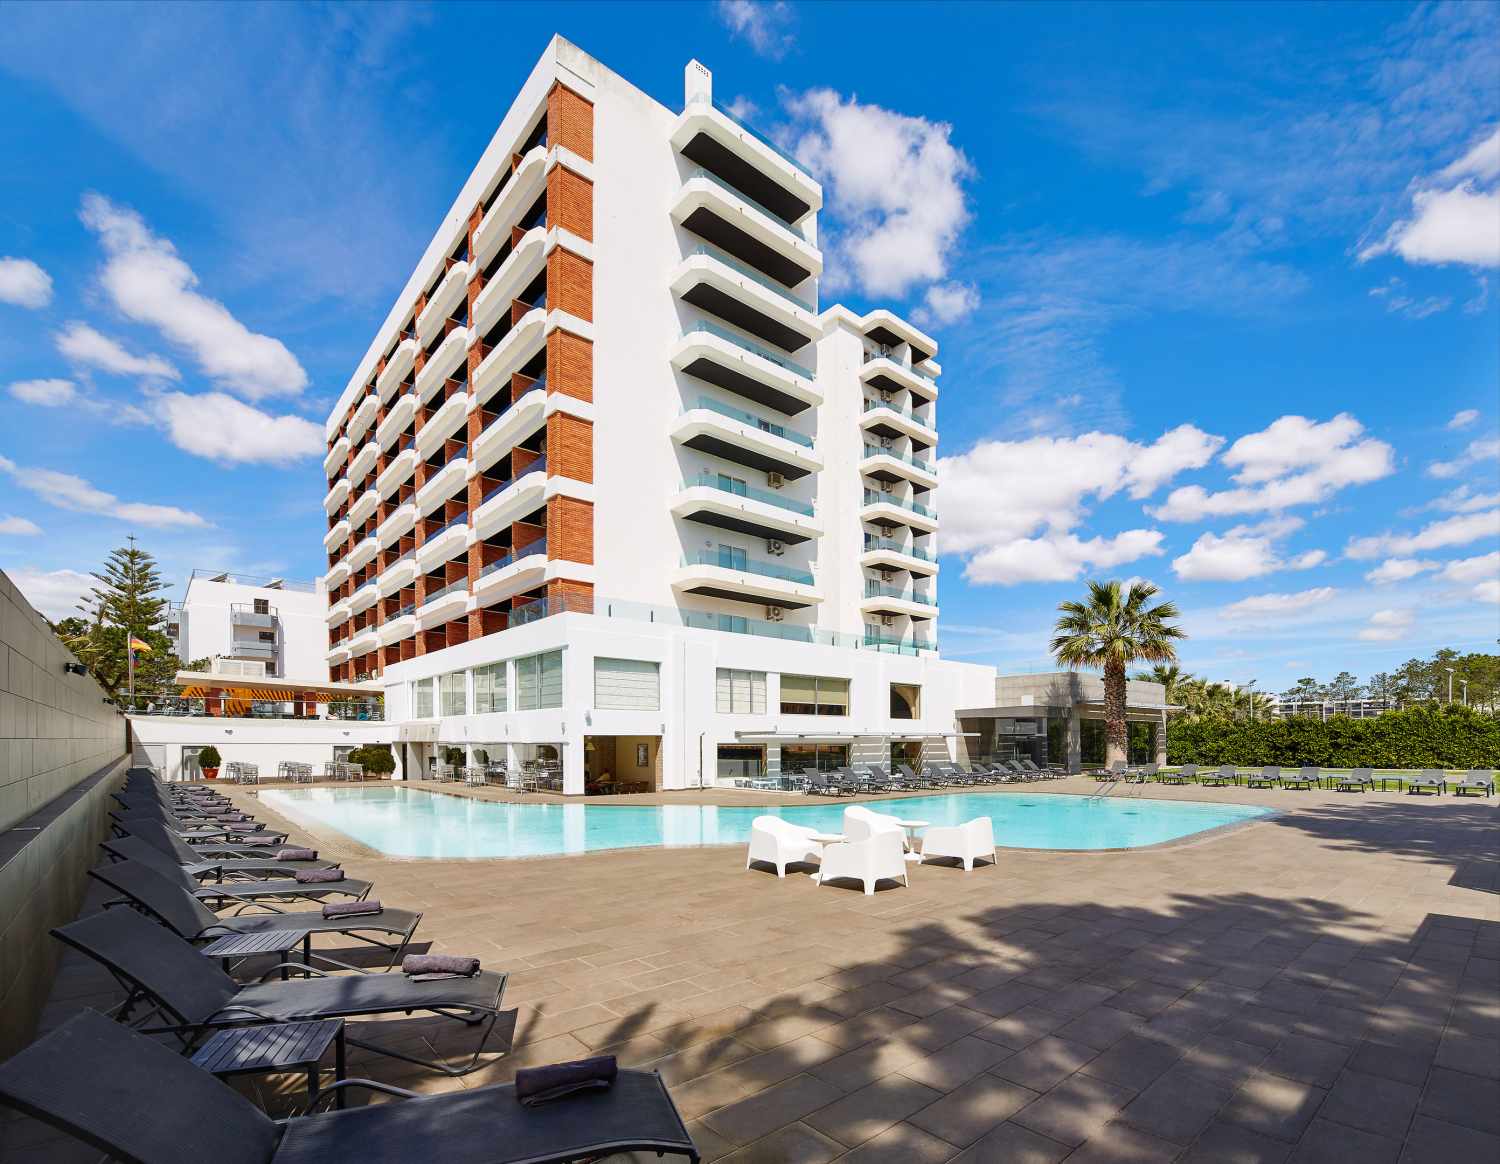 Alcazar Hotel & SPA, Monte Gordo, Algarve, Portugal